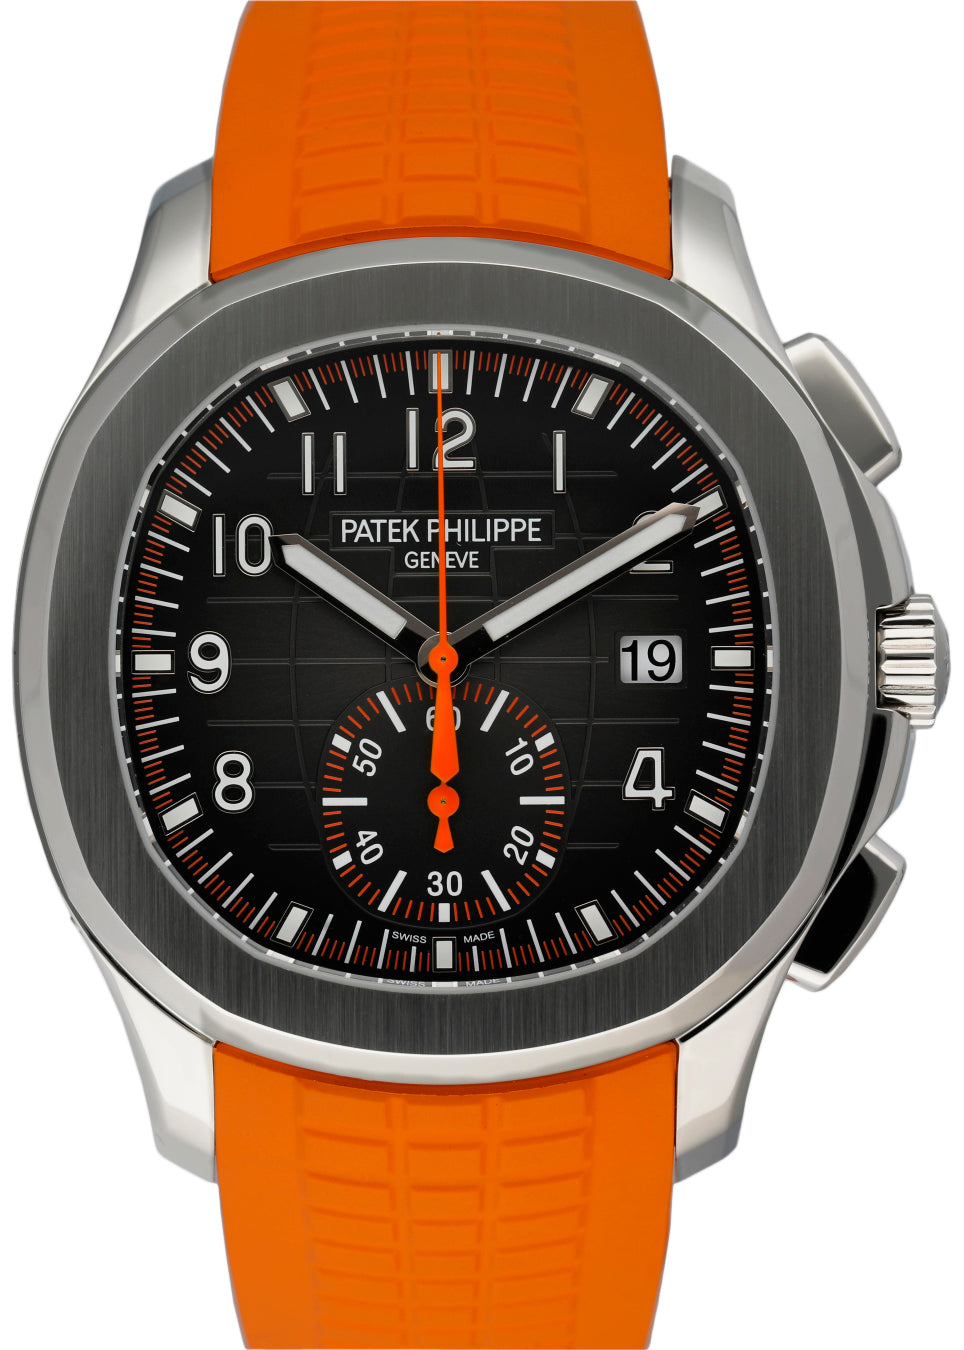 Patek Philippe Aquanaut 5968A Chronograph Watch